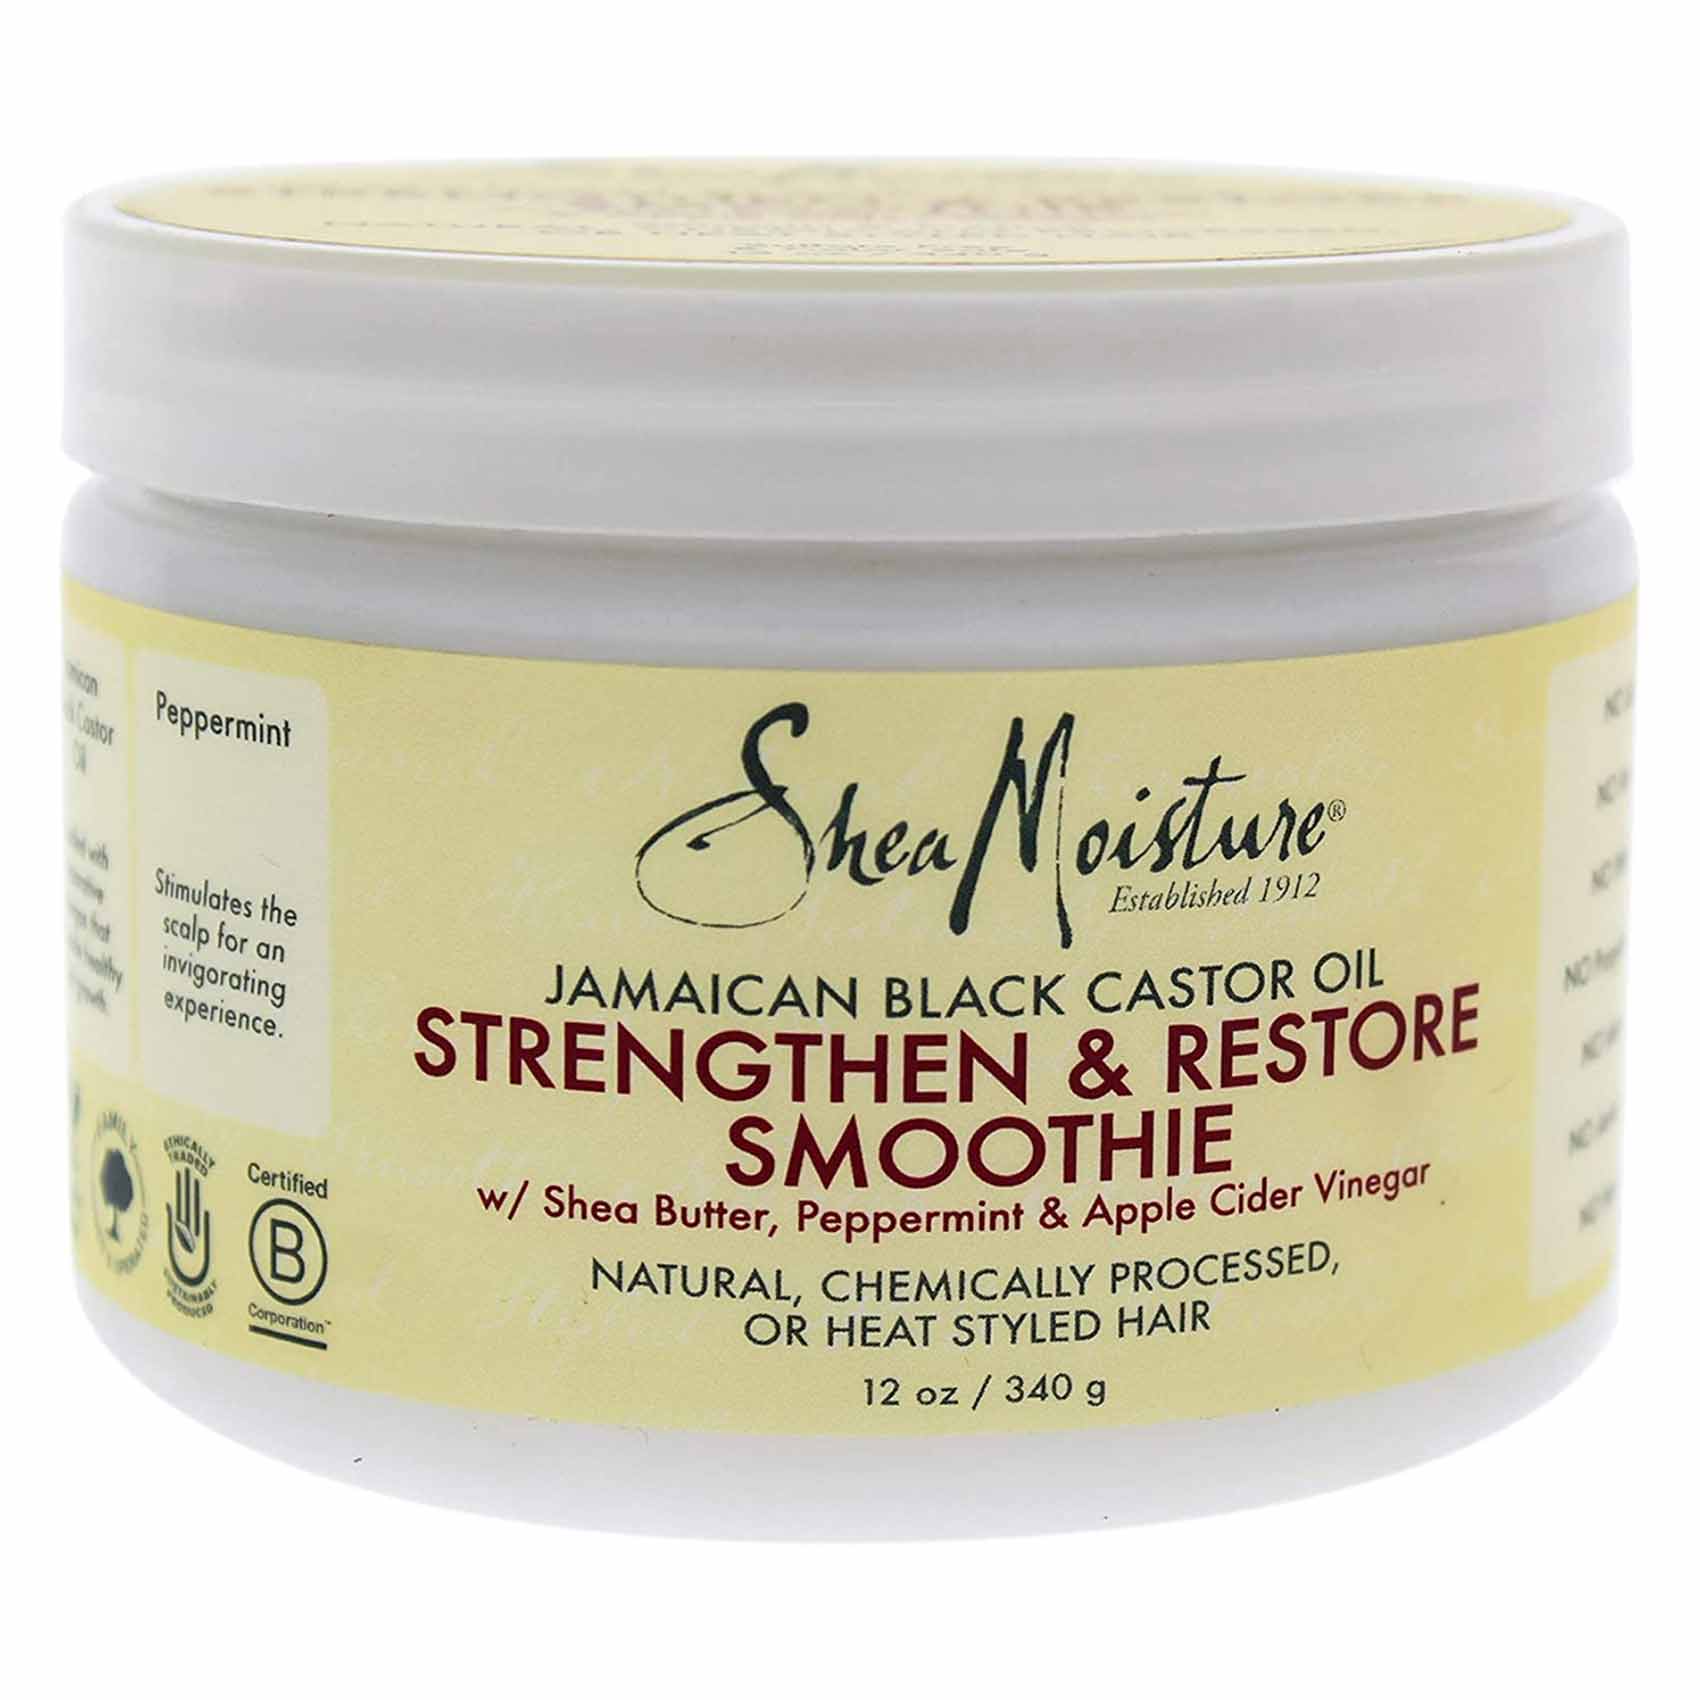 Shea Moisture Jamaican Black Castor Oil Strengthen and Restore Hair Smoothie 340g